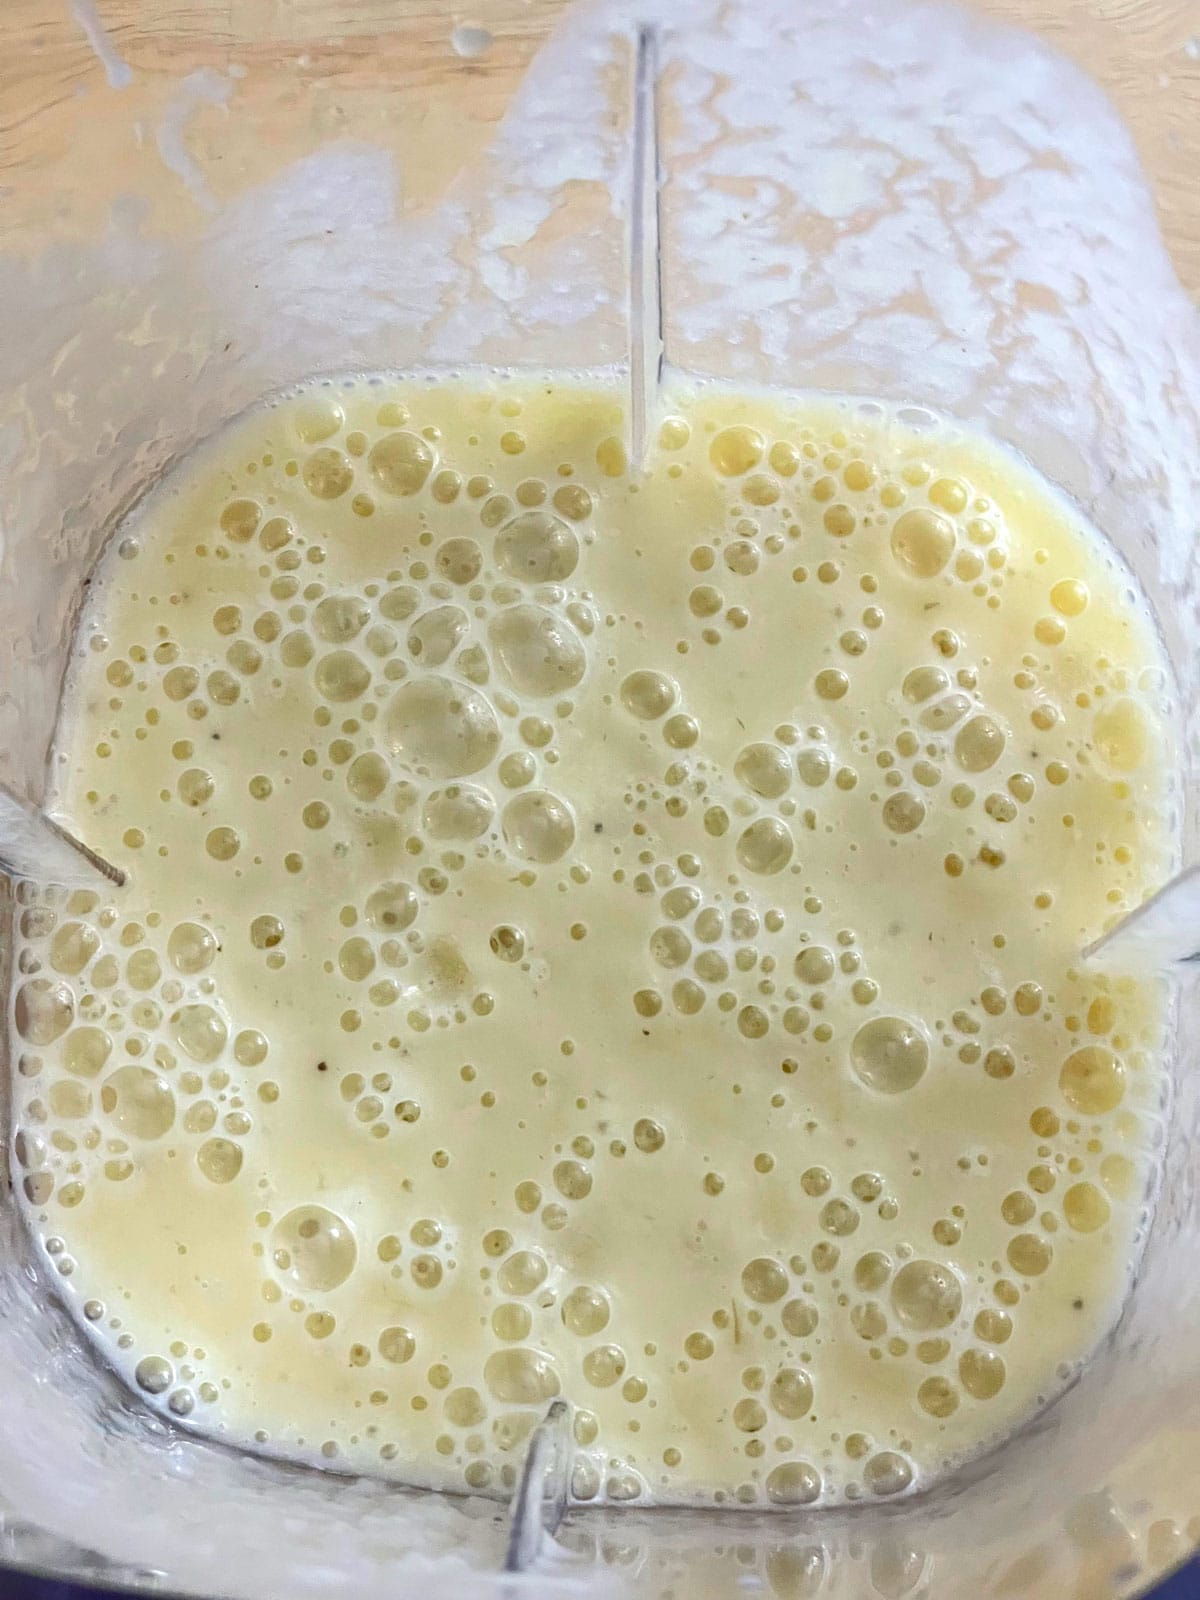 banana pineapple juice smoothie in blender